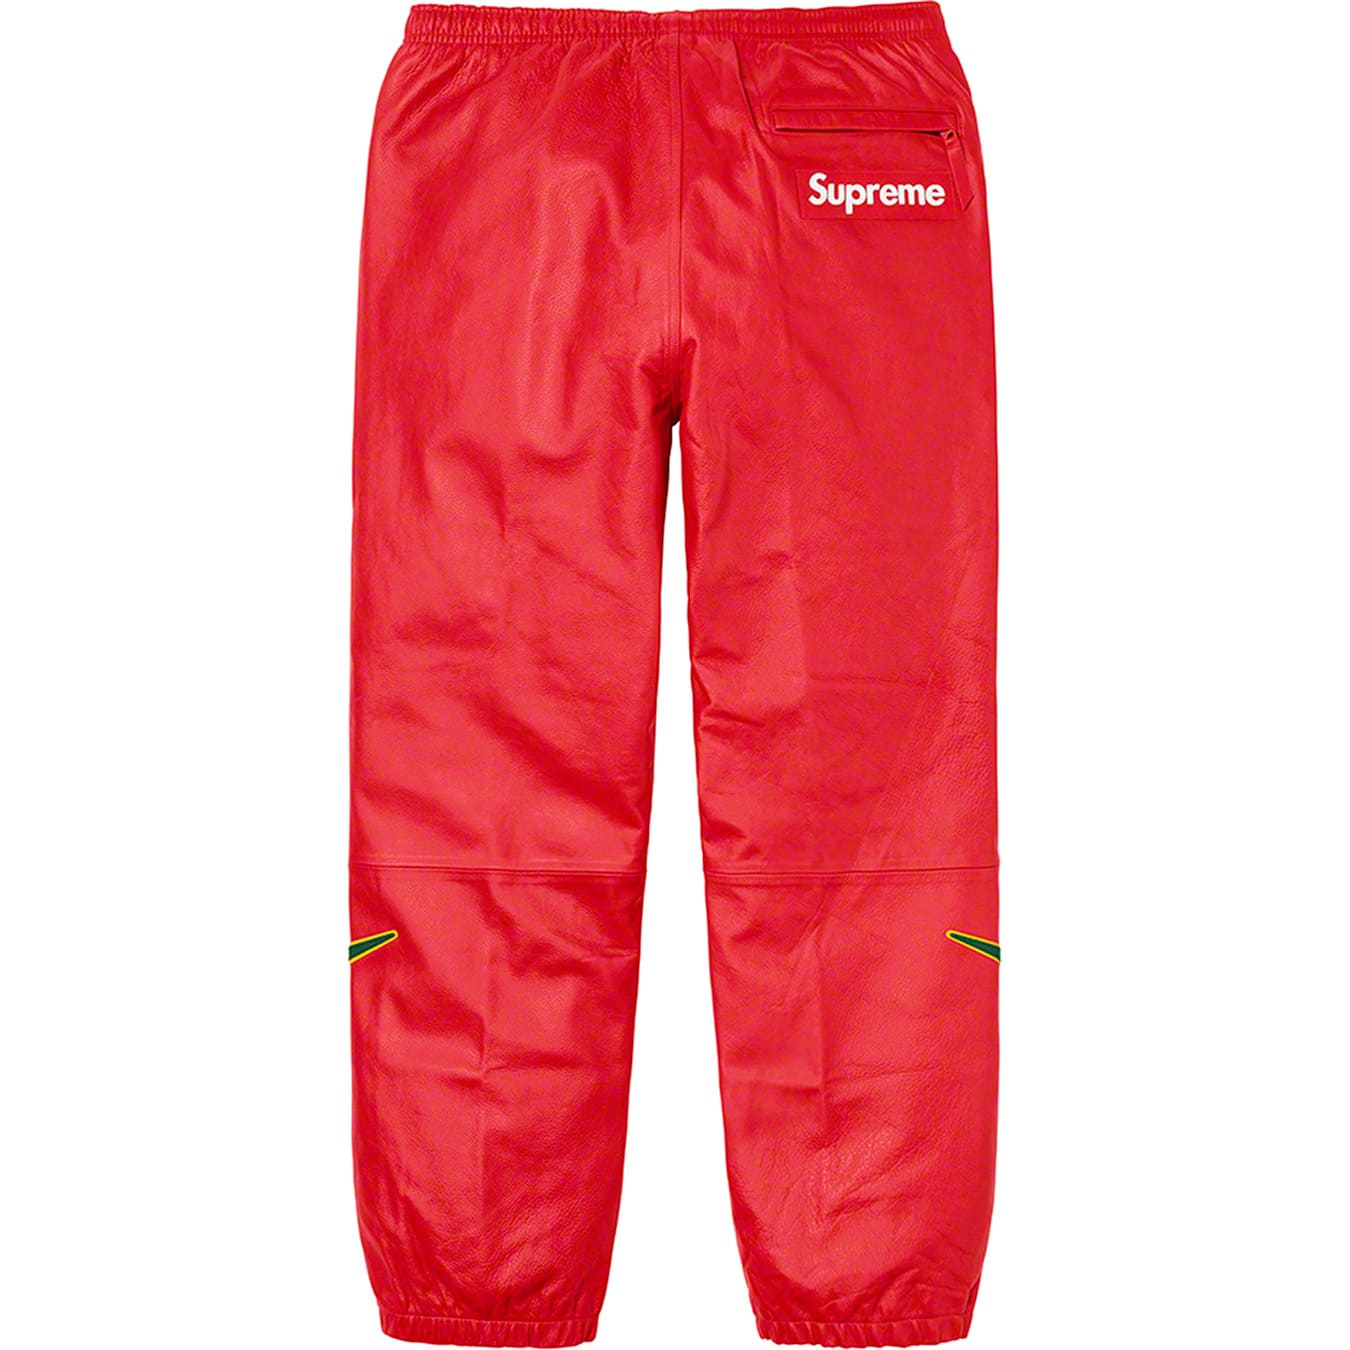 Supreme®/Nike® Leather Warm Up Pant